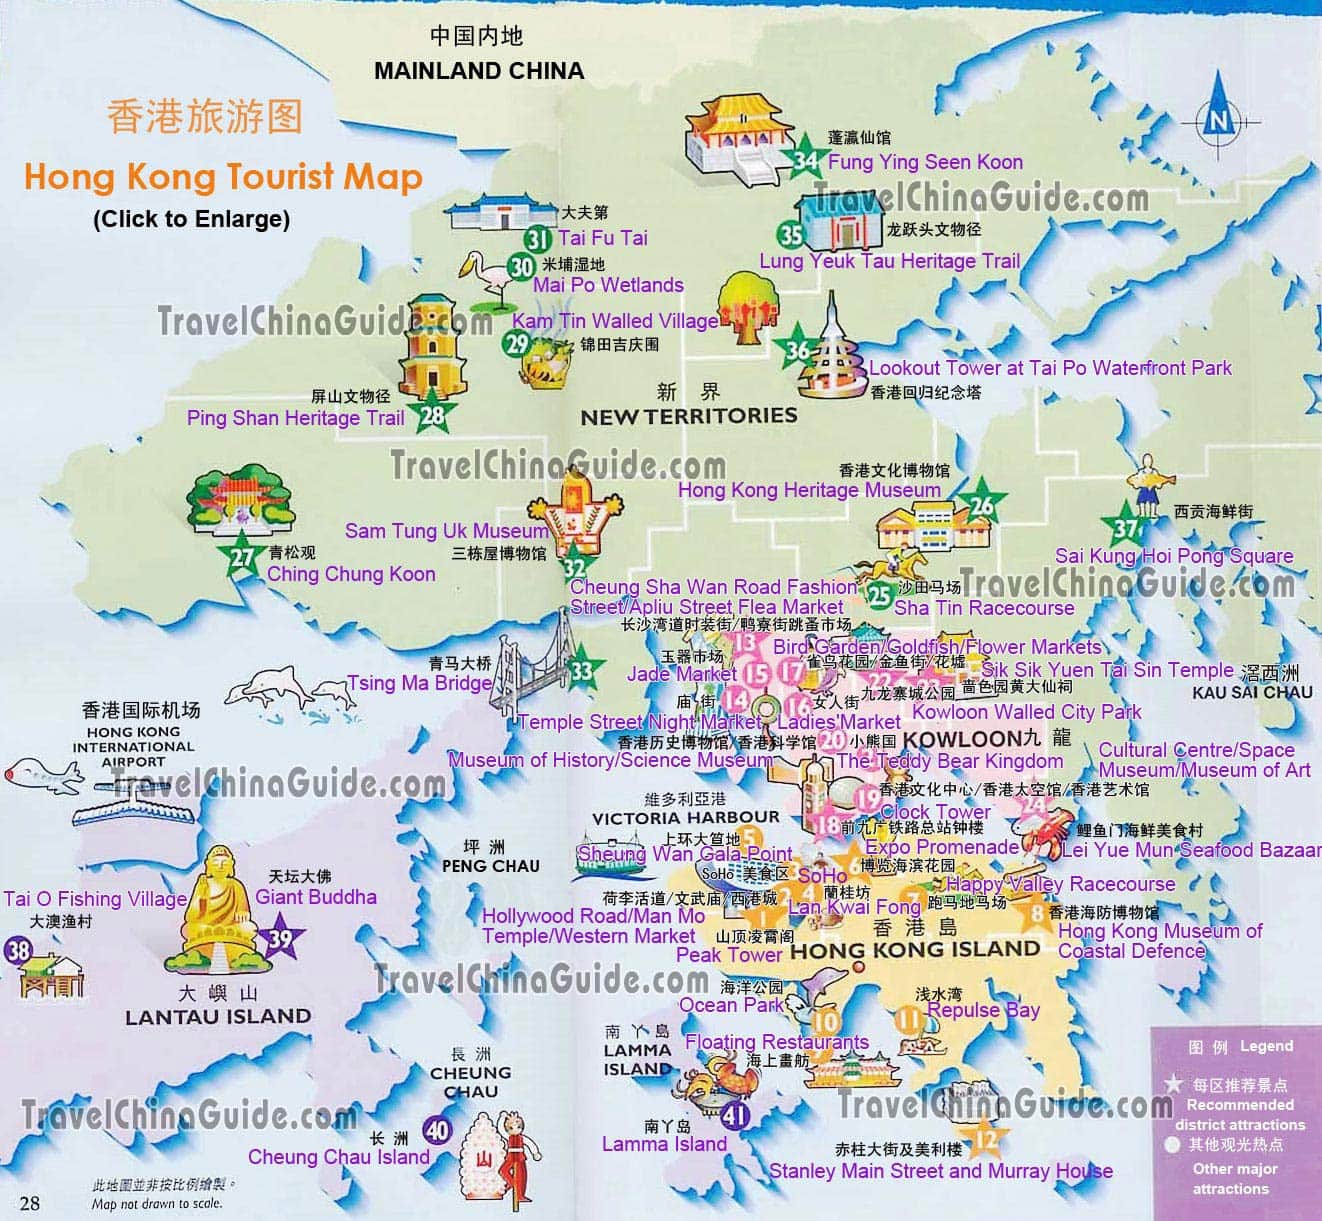 Hong Kong Map: Location, Surroundings, City Layout, Attractions